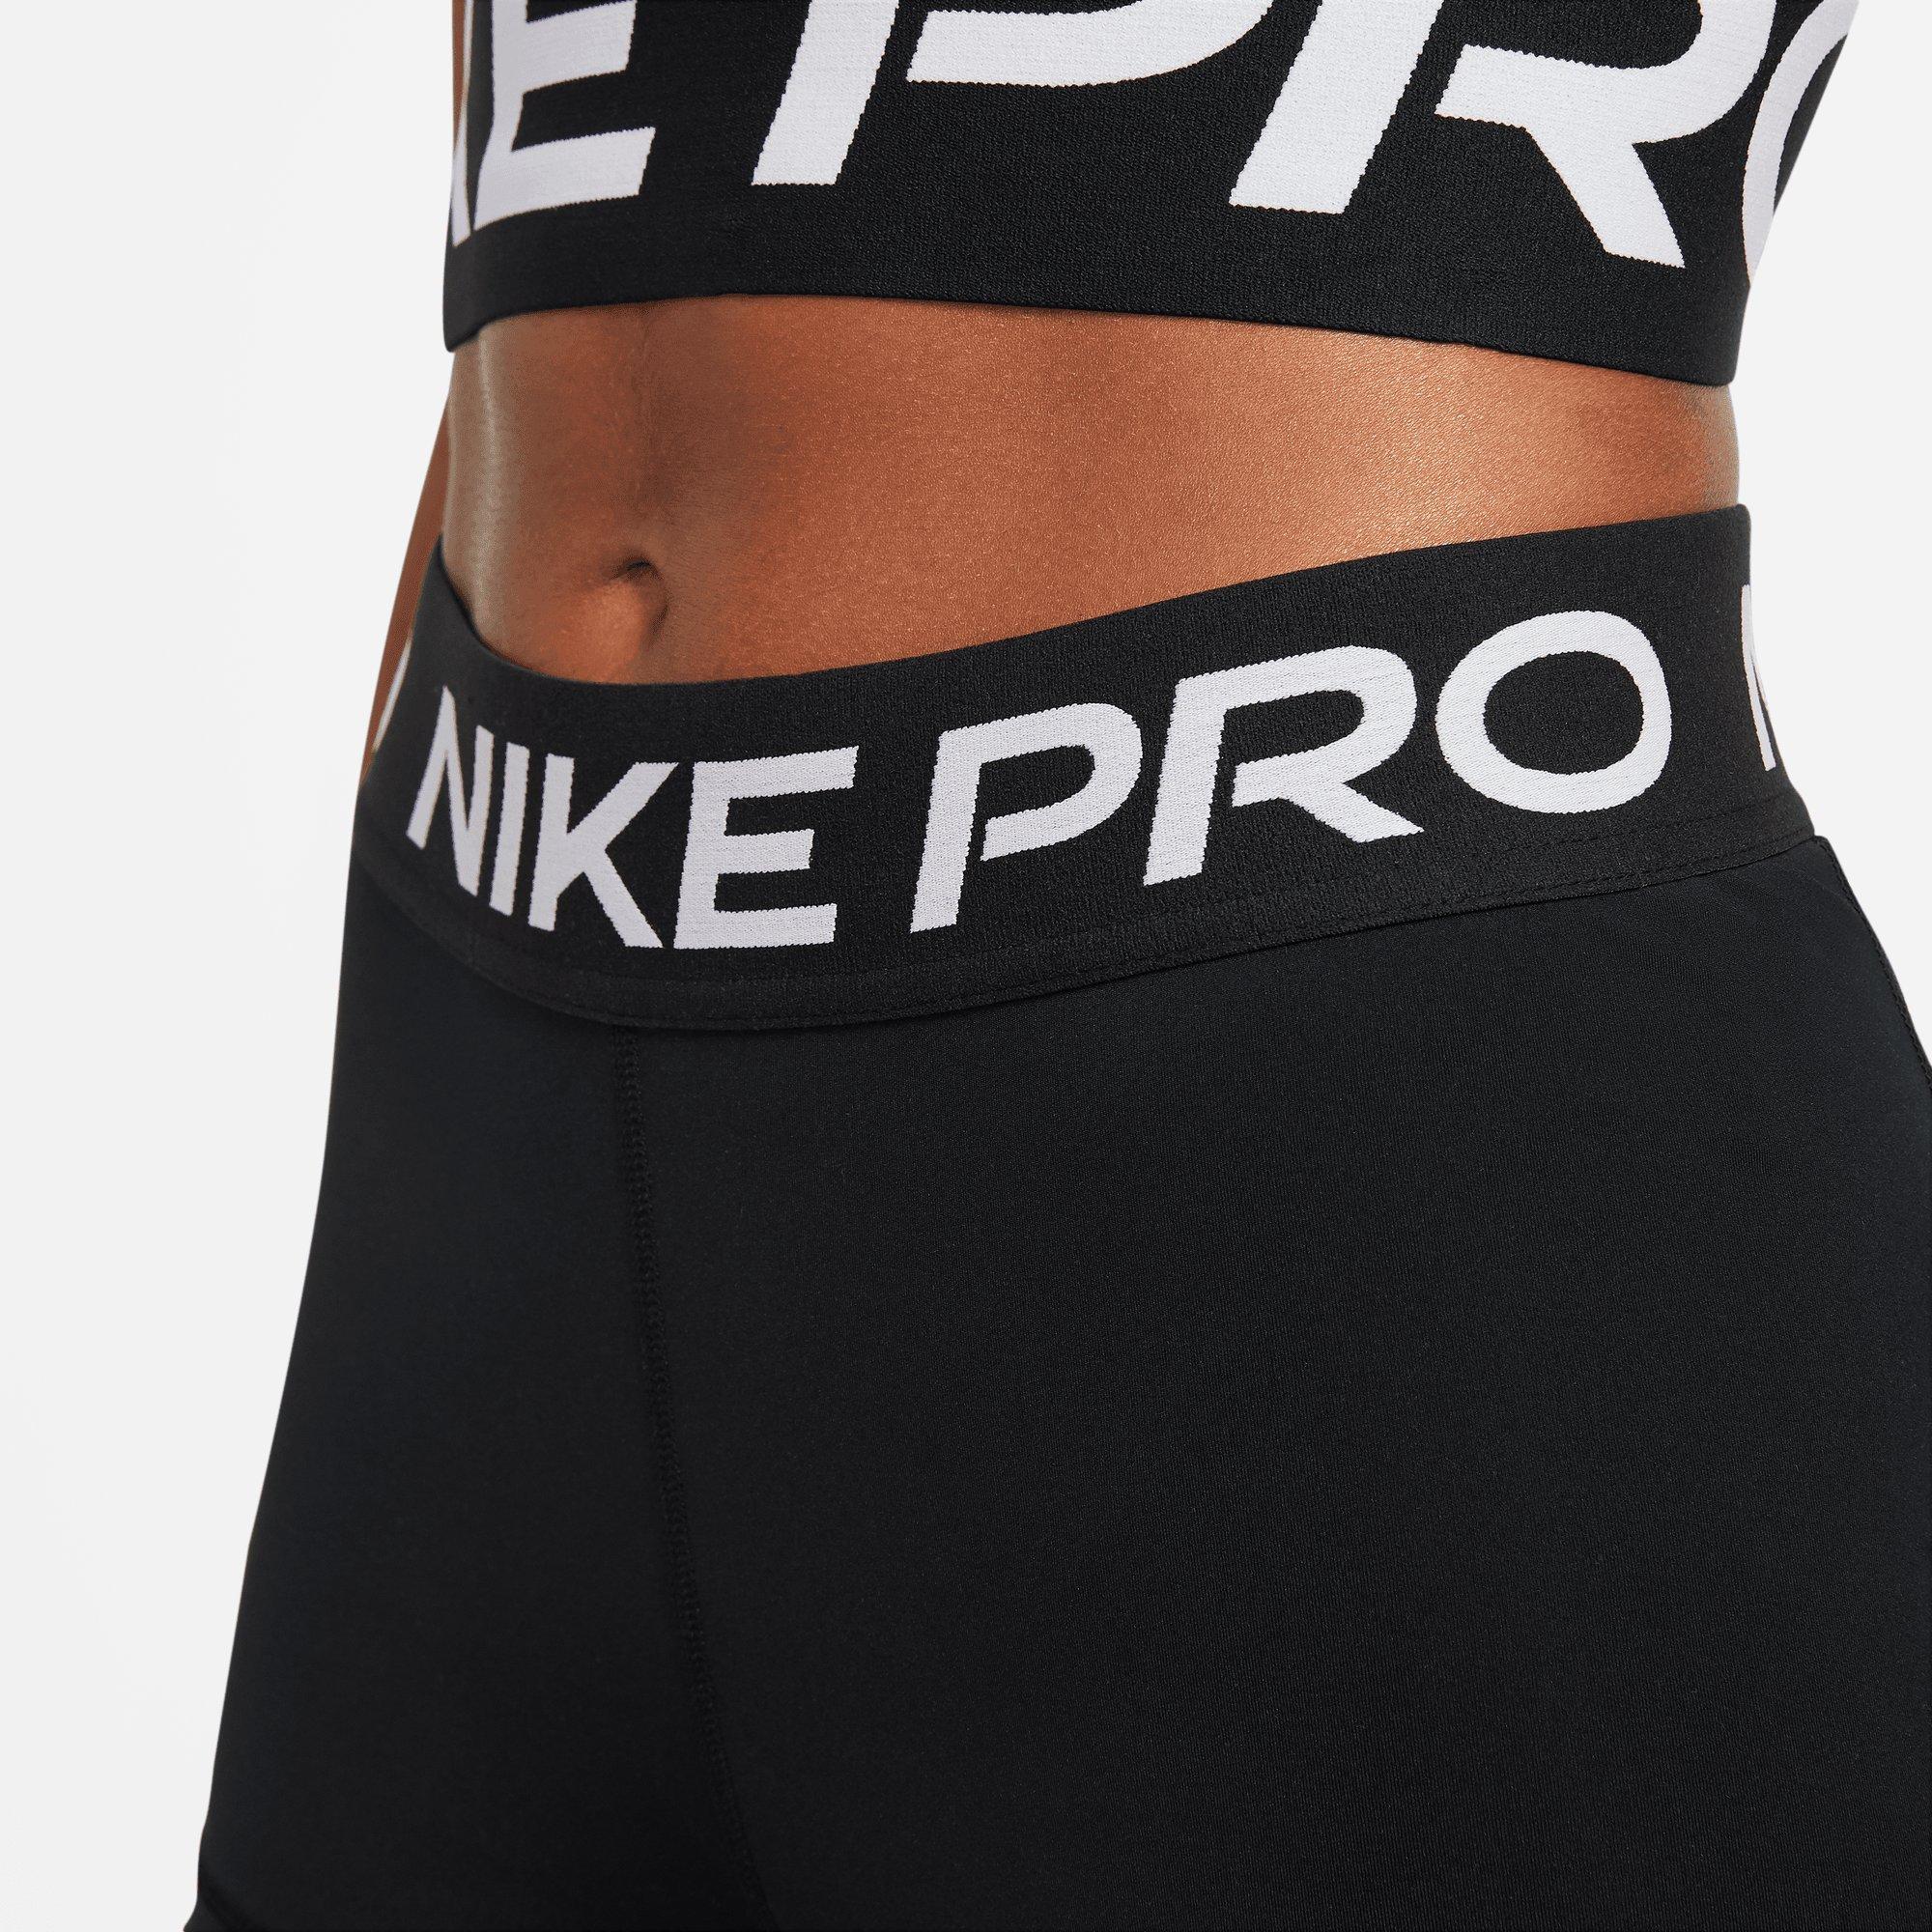 Buy Nike Pro 3in Shorts Women Black, White online